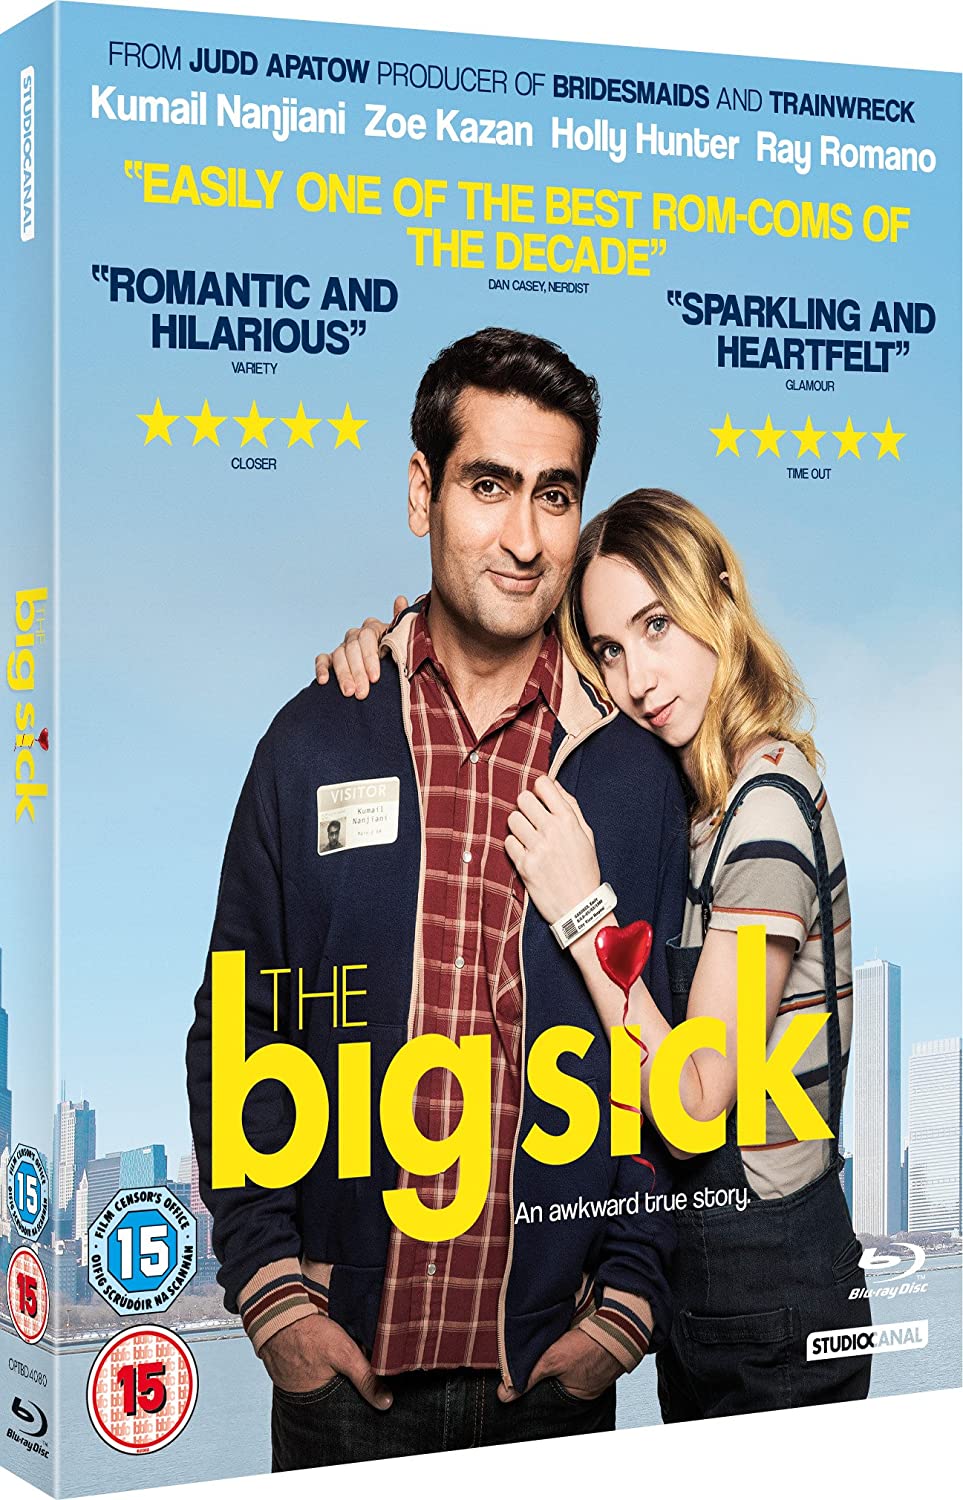 The Big Sick [2017] - Romance/Drama [Blu-ray]